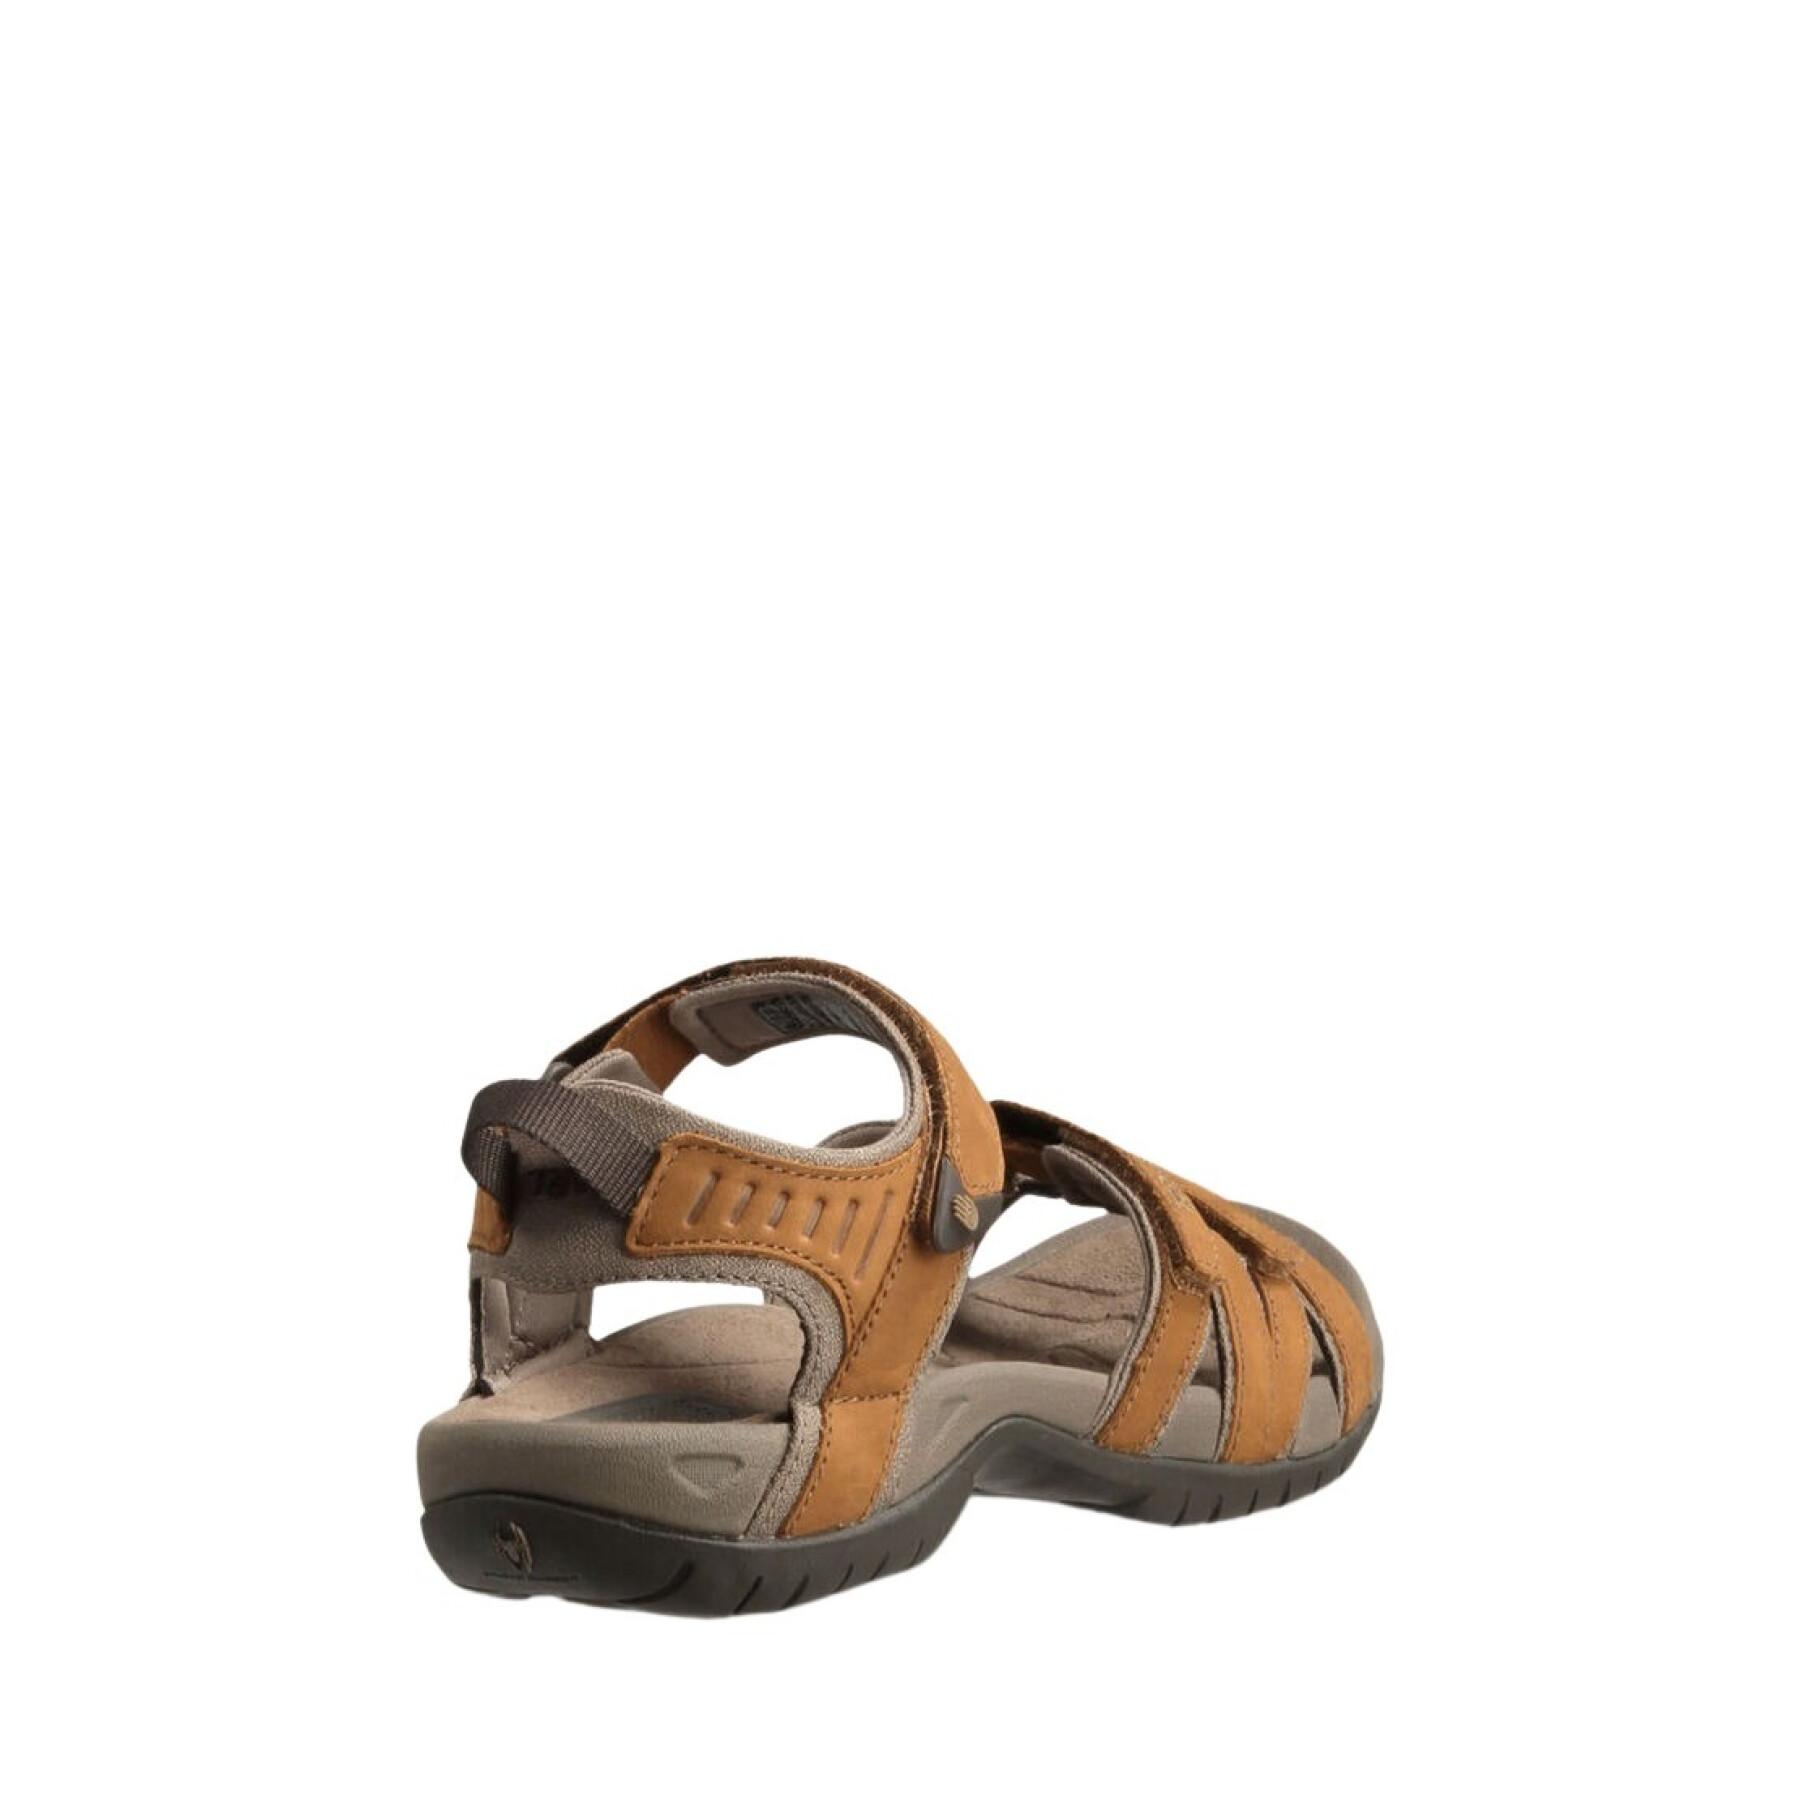 Women's sandals Teva Tirra Leather